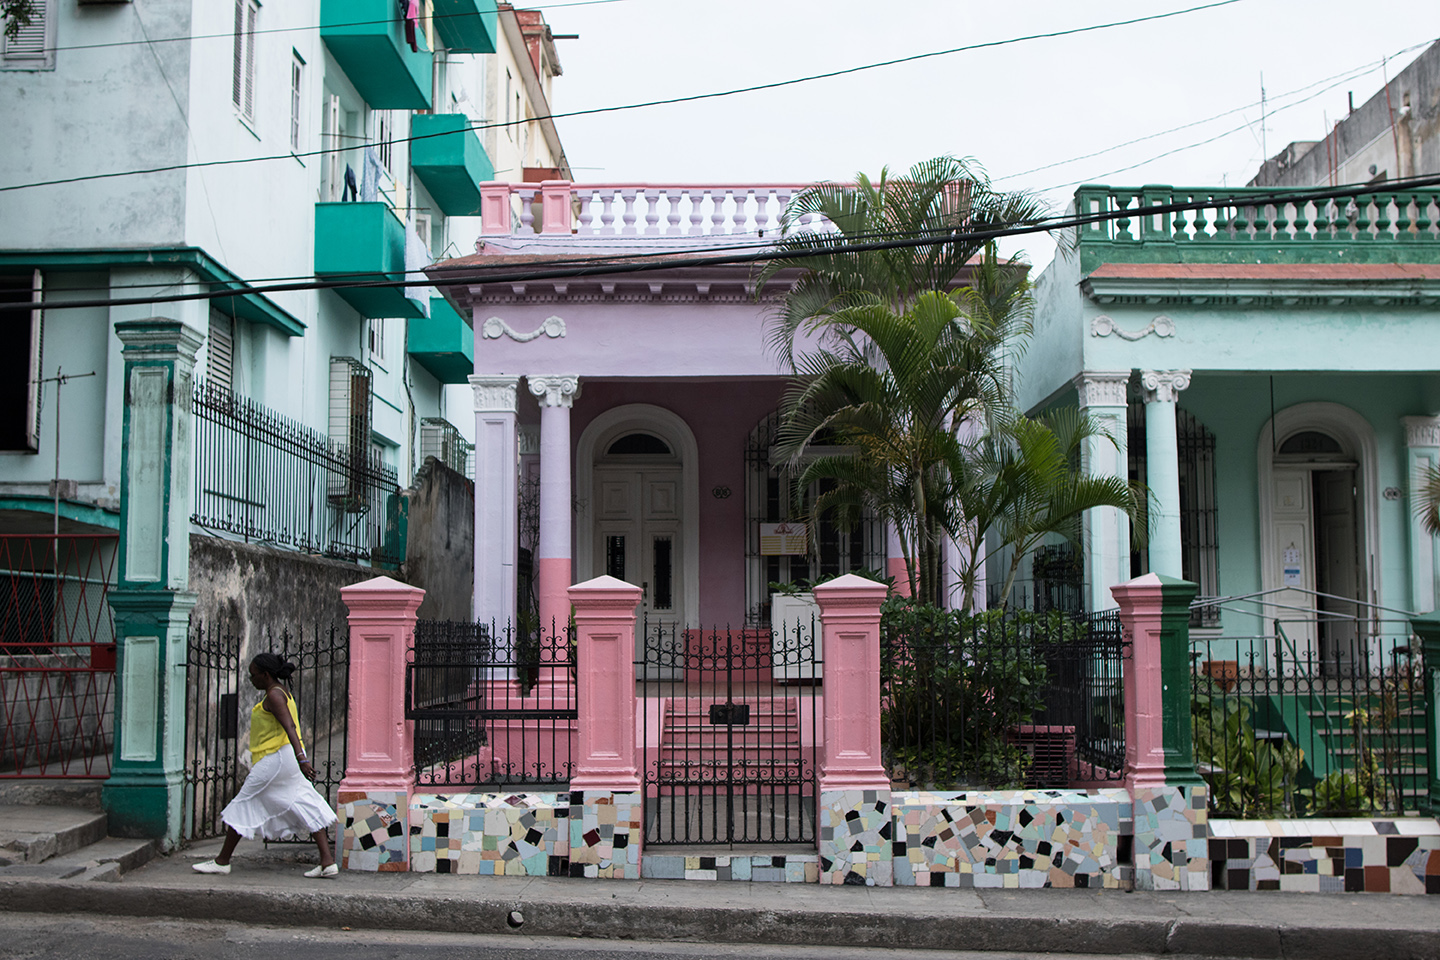 Havana’s unique architecture and efforts to preserve it